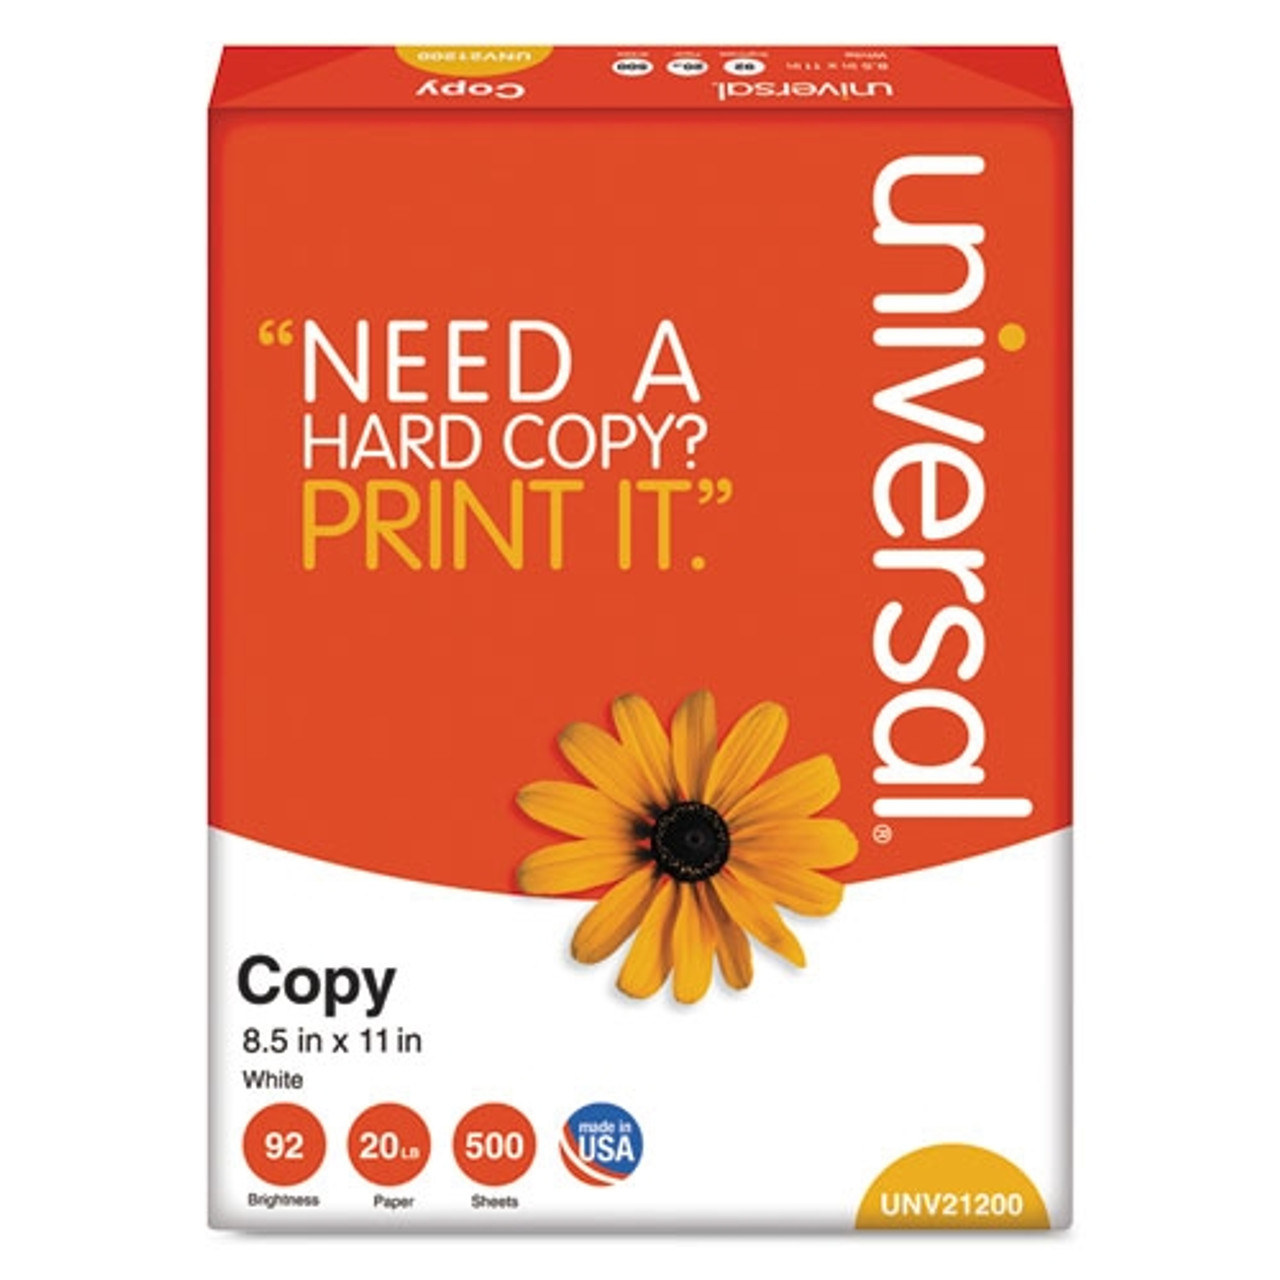 Single Ream of Copy Paper